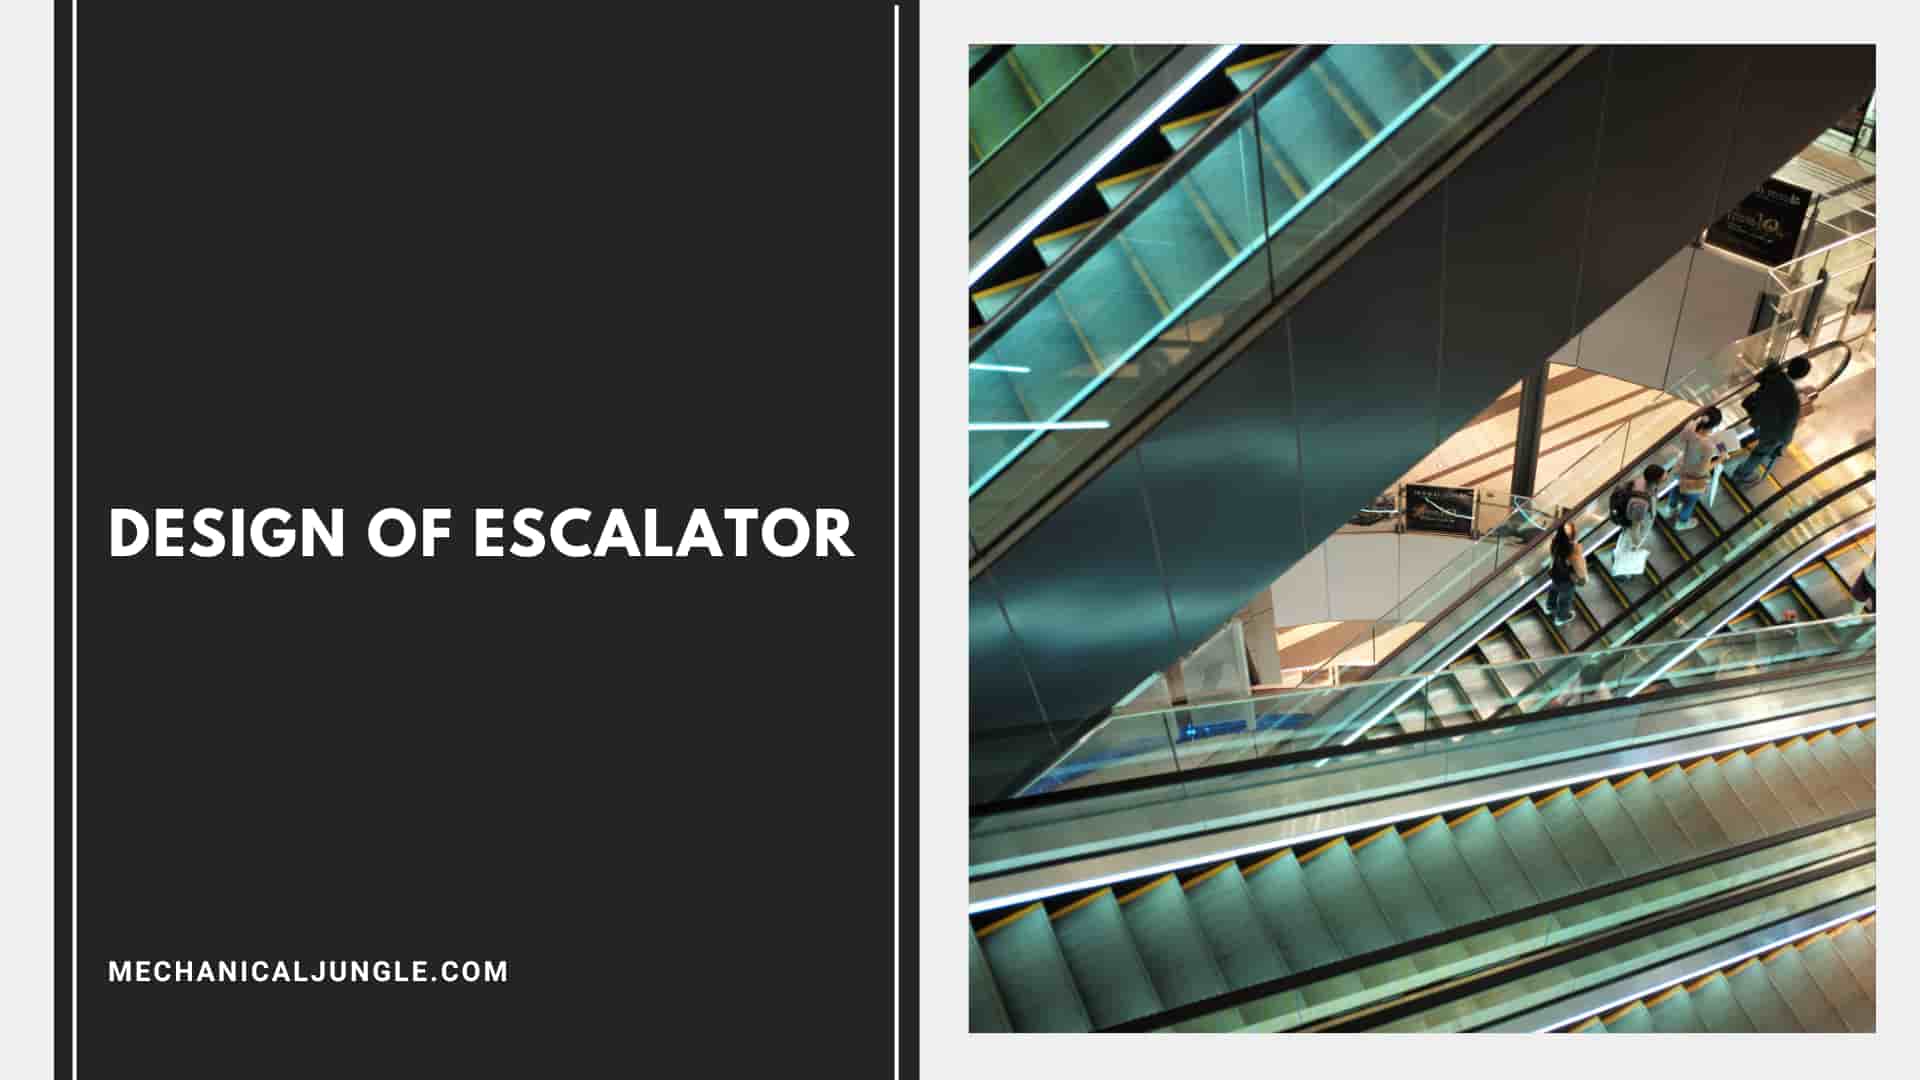 Design of Escalator: